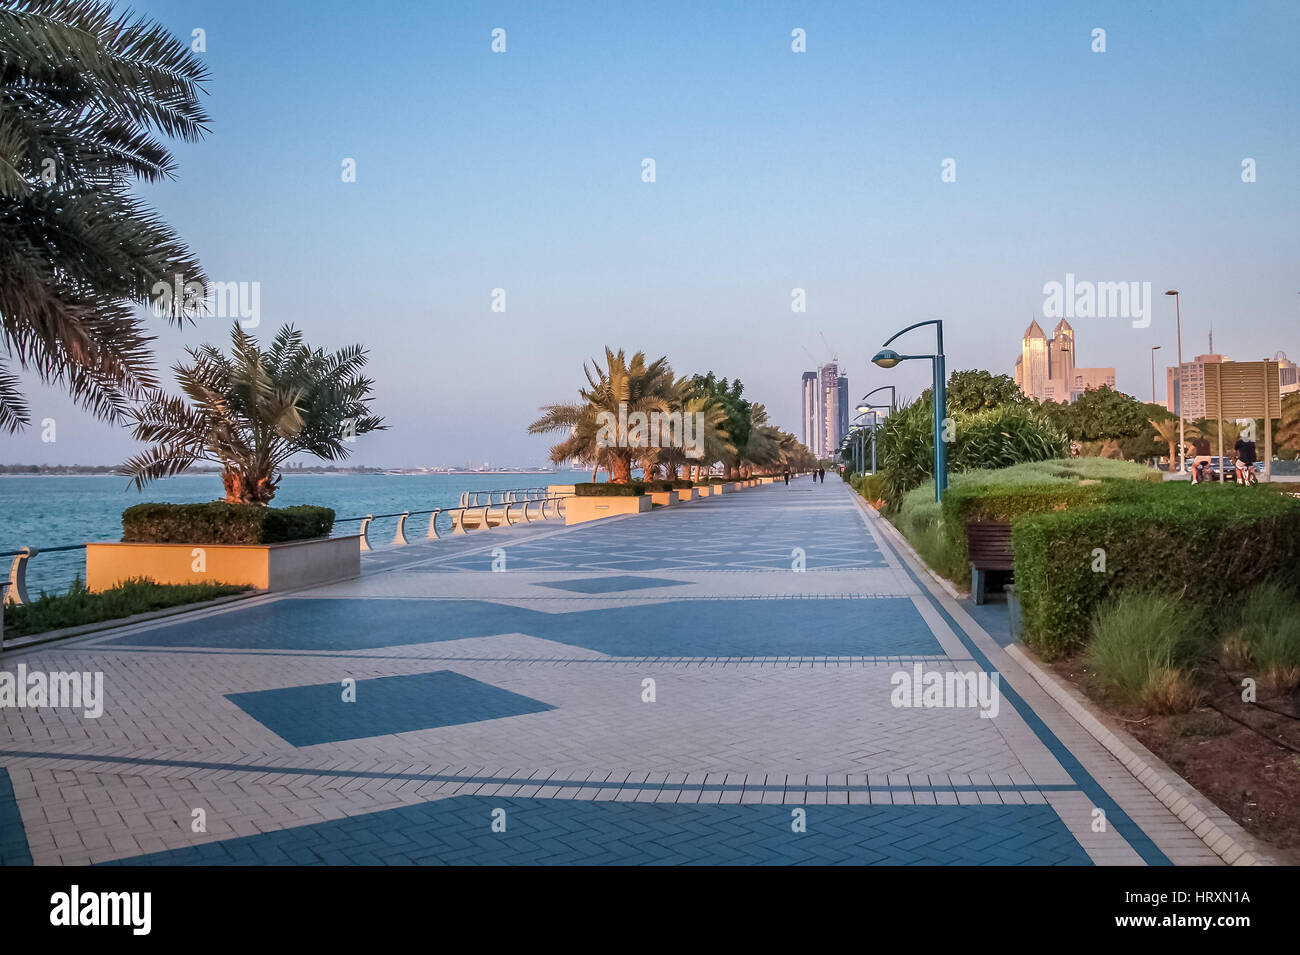 Corniche - Abu Dhabi, United Arab Emirates Stock Photo